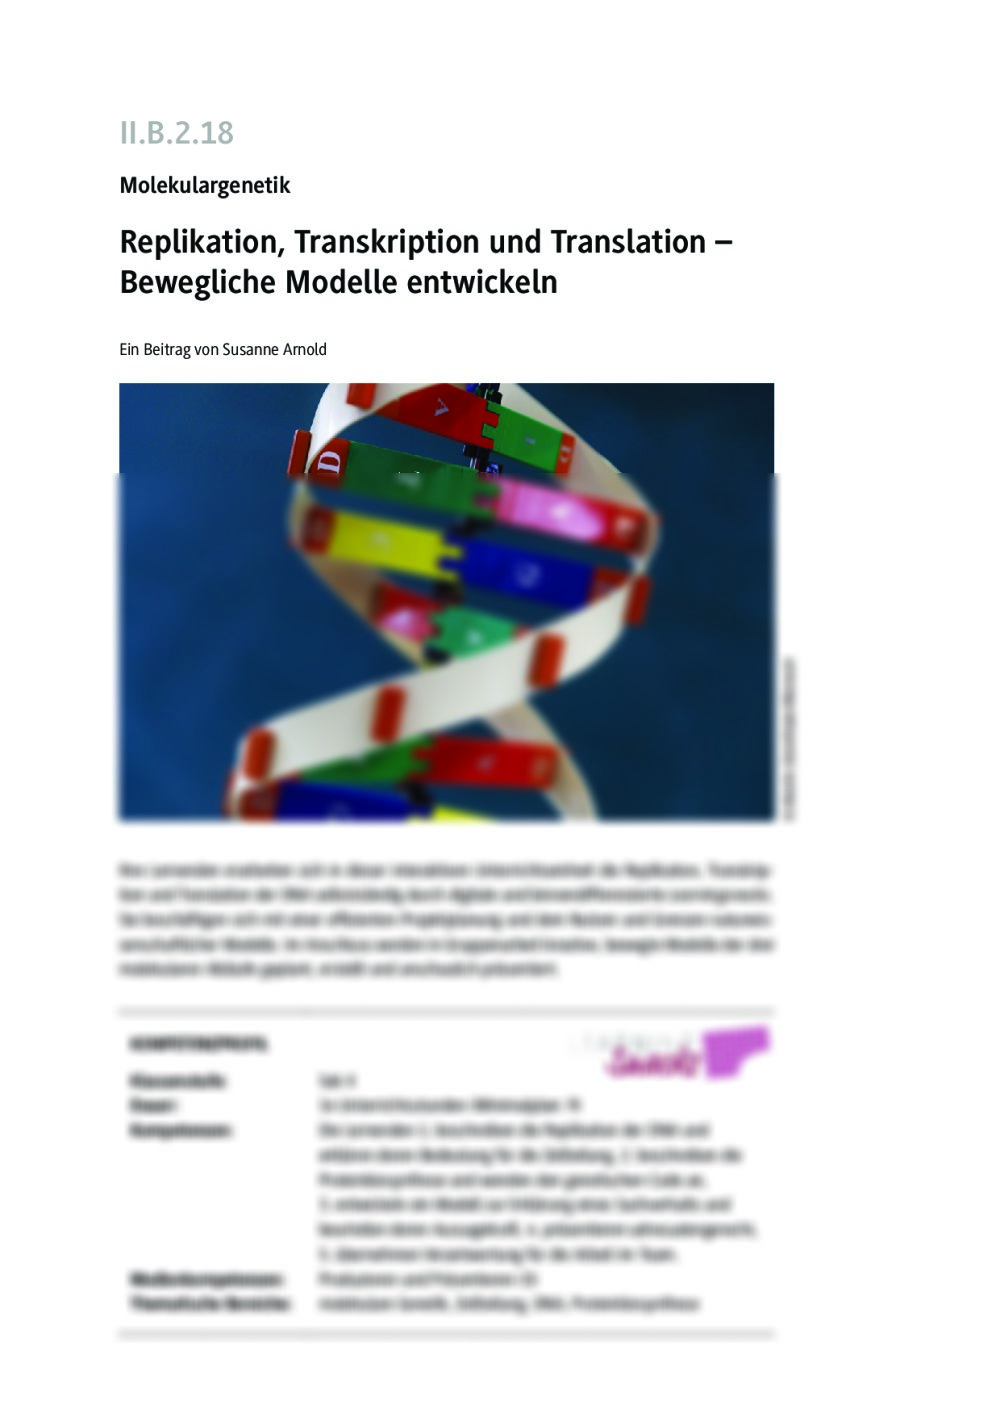 Replikation, Transkription und Translation - Seite 1